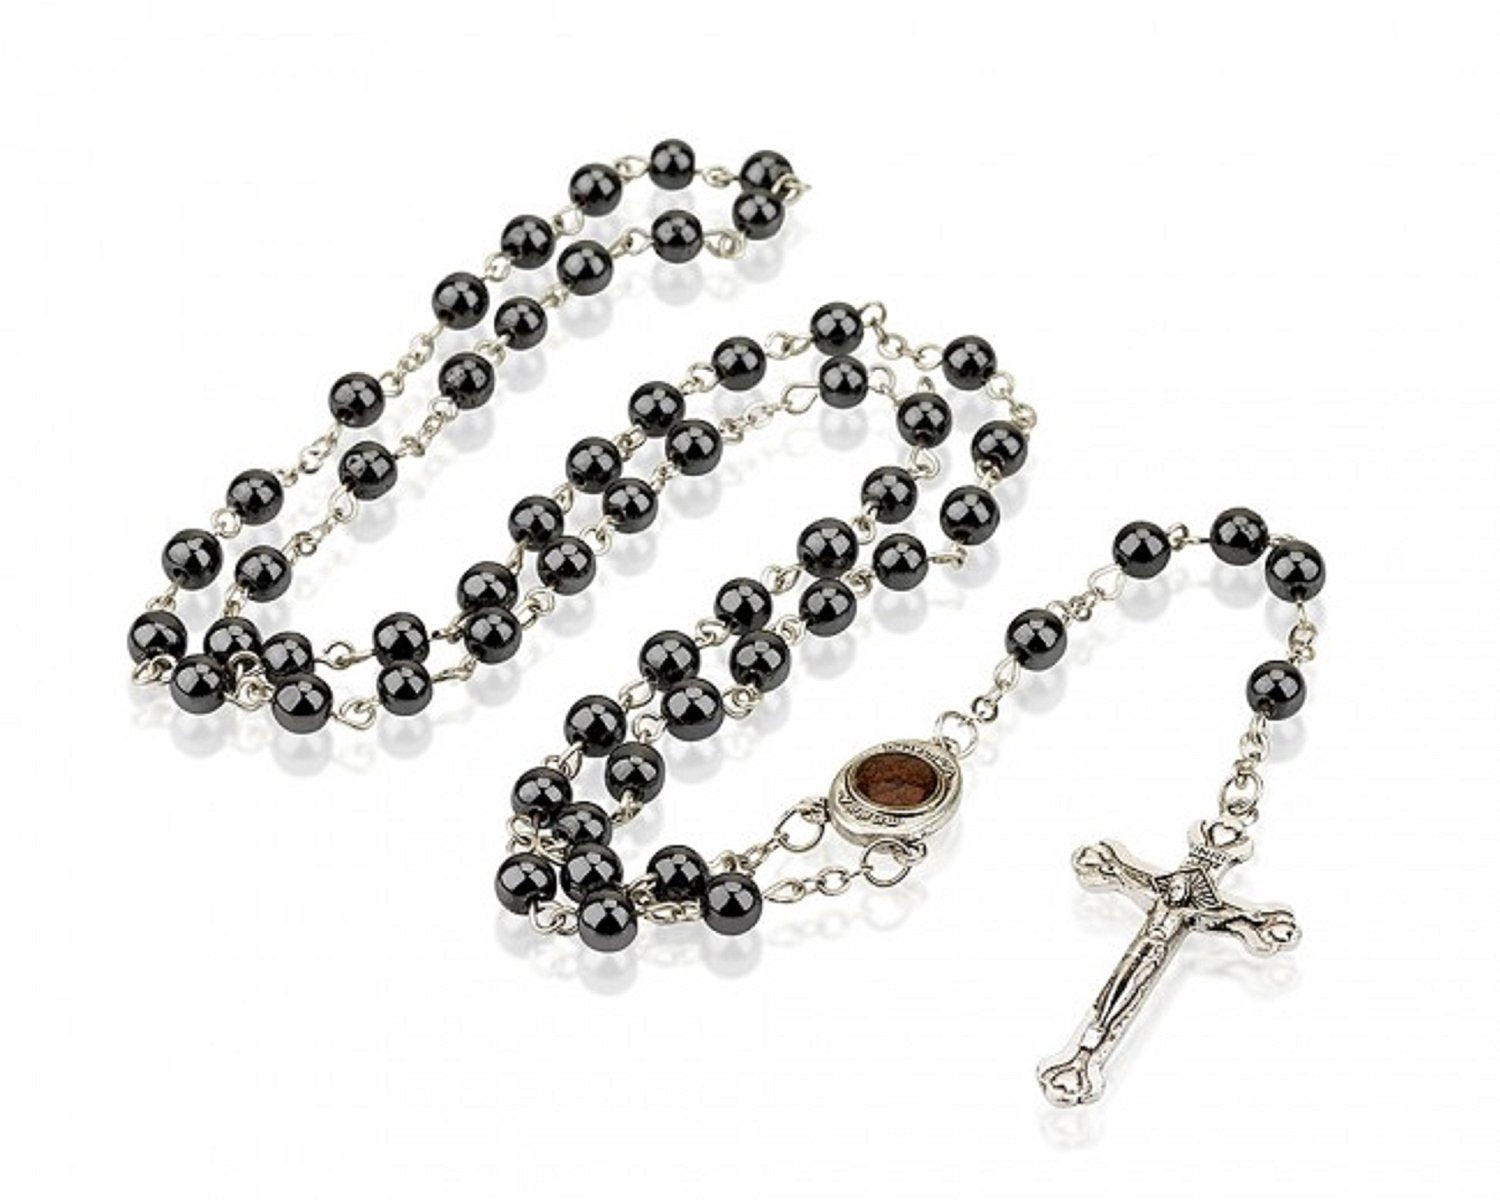 2 x St. Michael Holy Soil Rosary